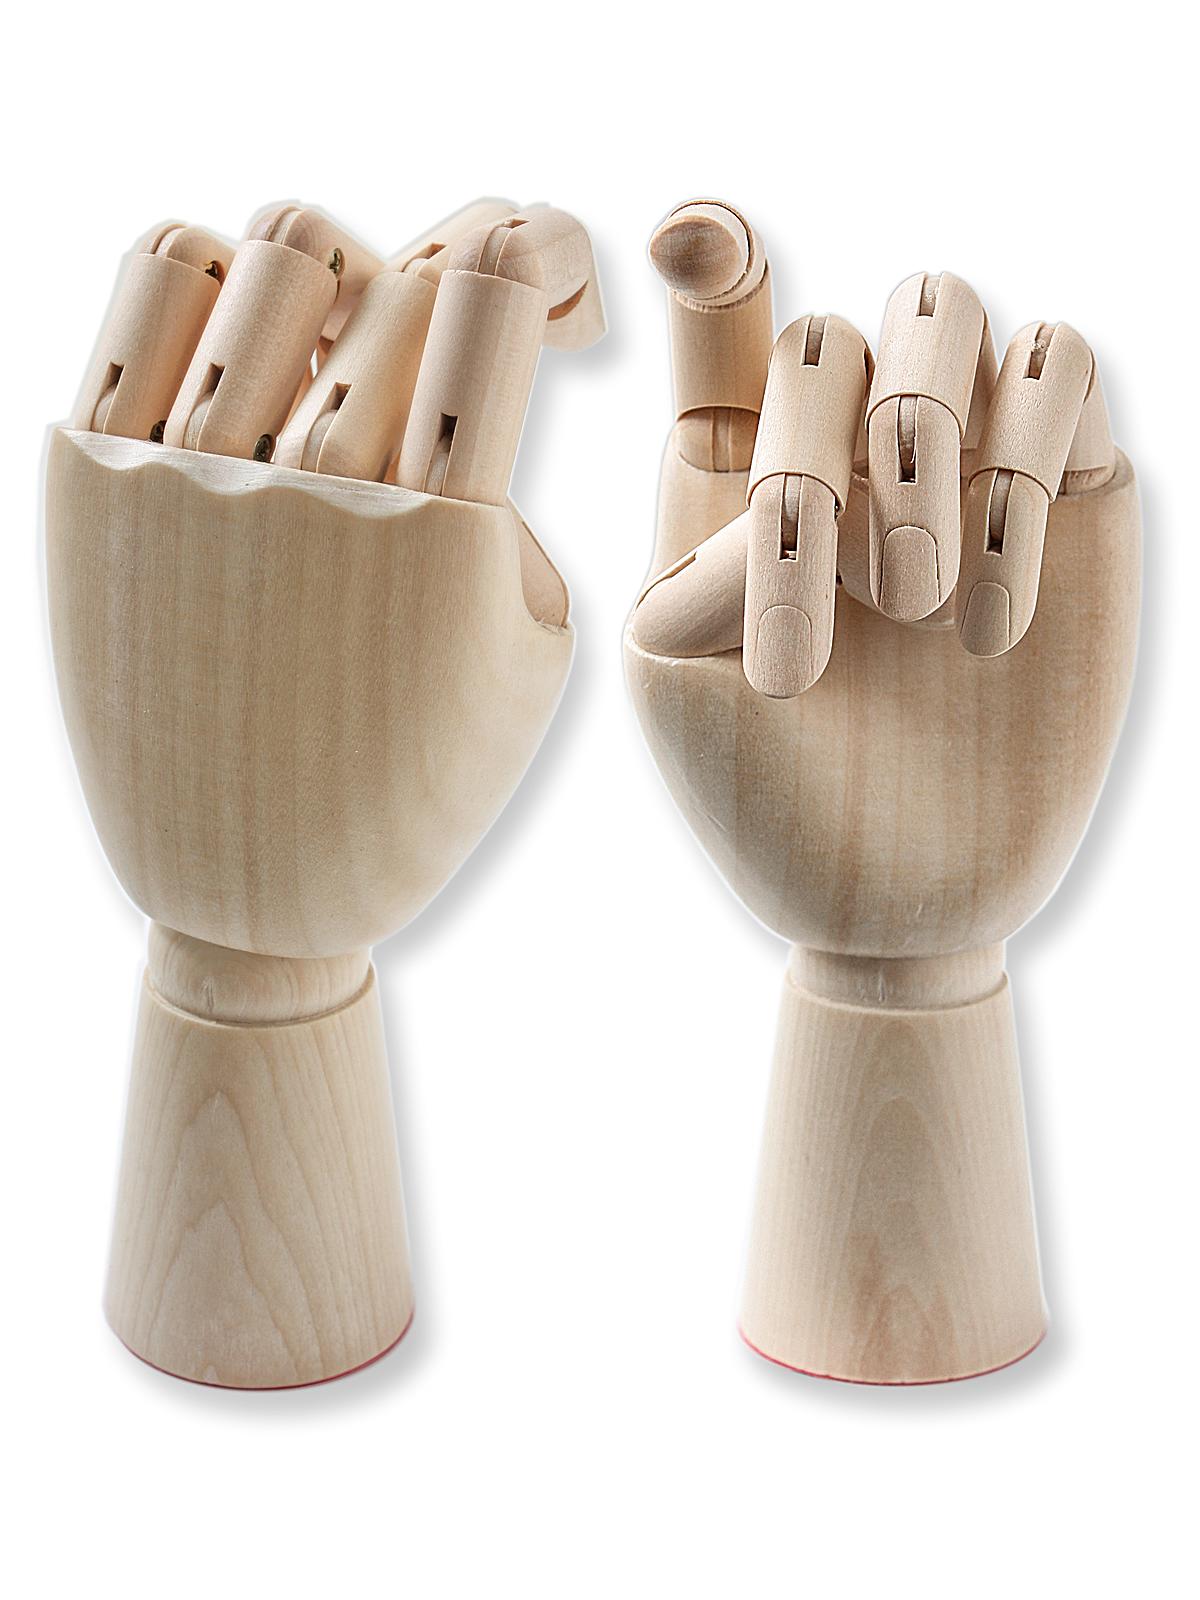 Wood Hand Manikins Child Hand